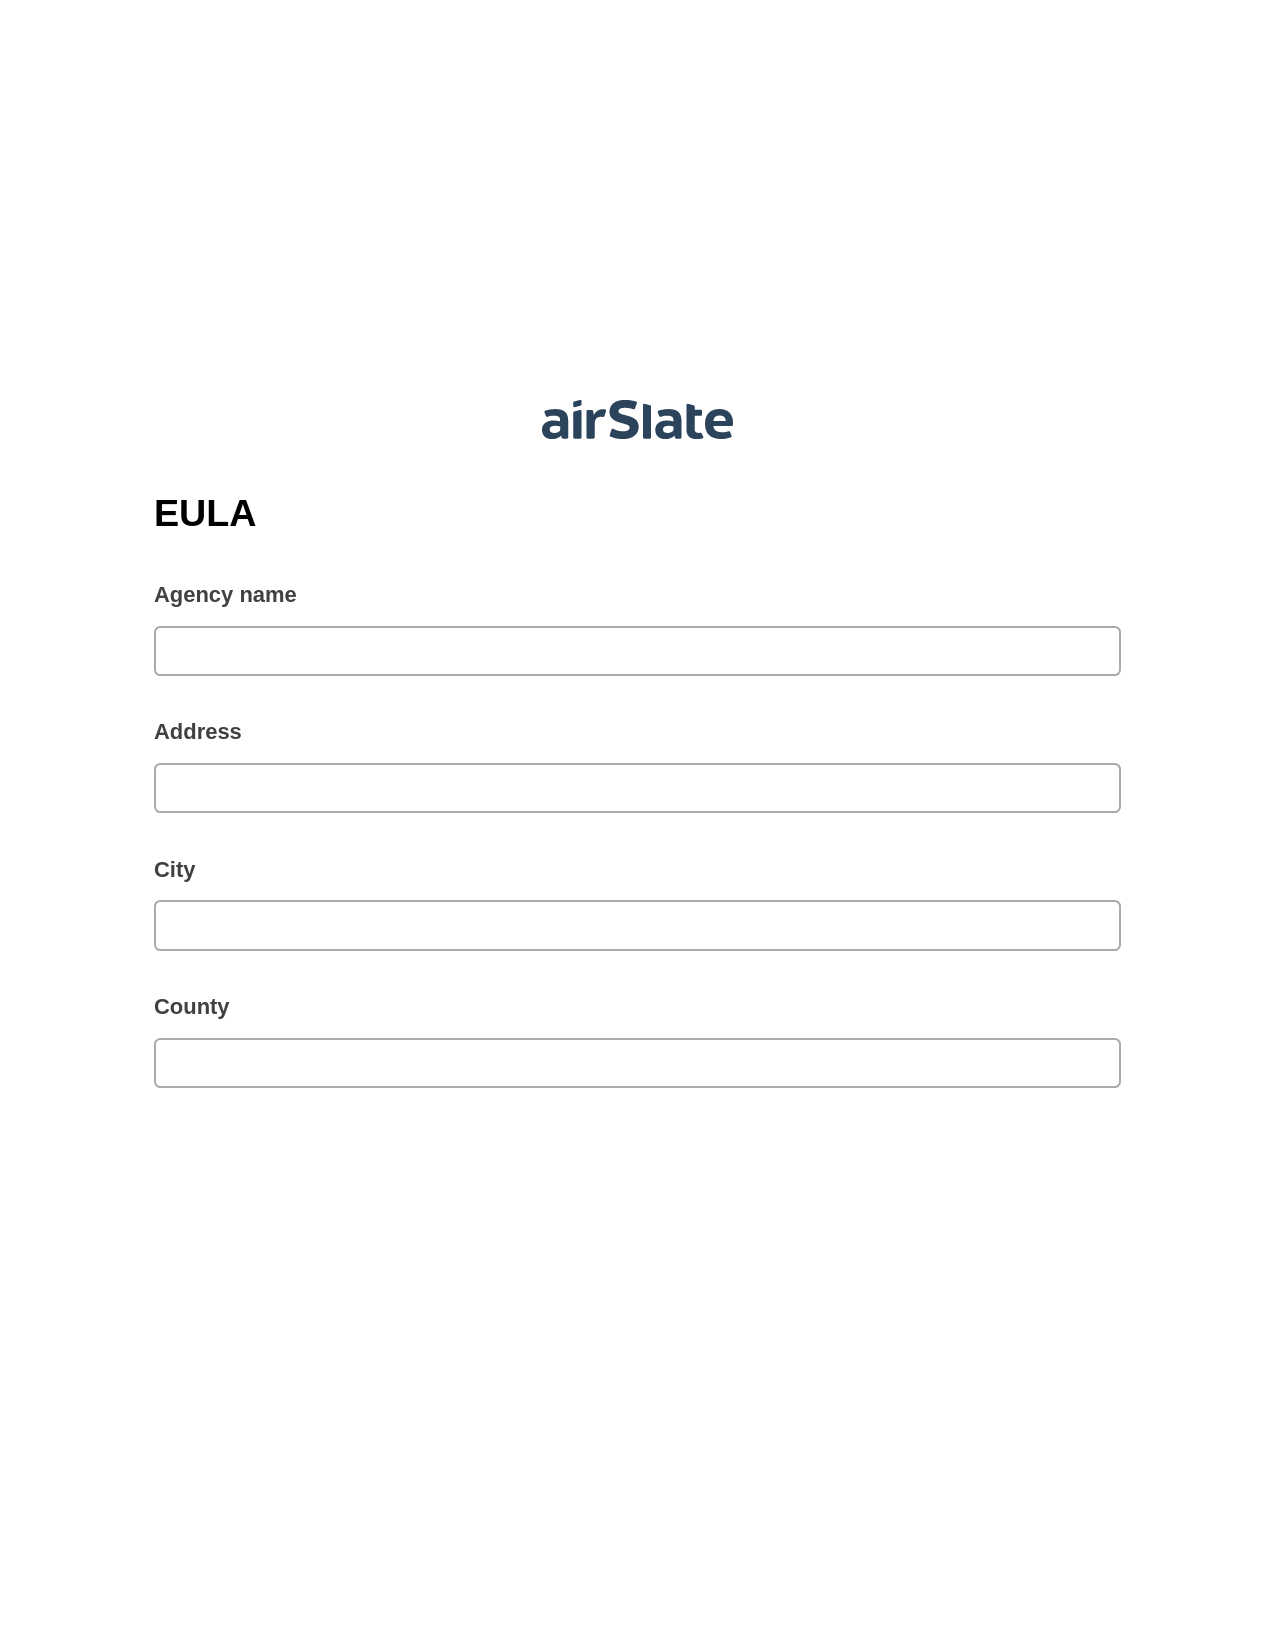 EULA Pre-fill from CSV File Bot, Webhook Bot, Google Drive Bot